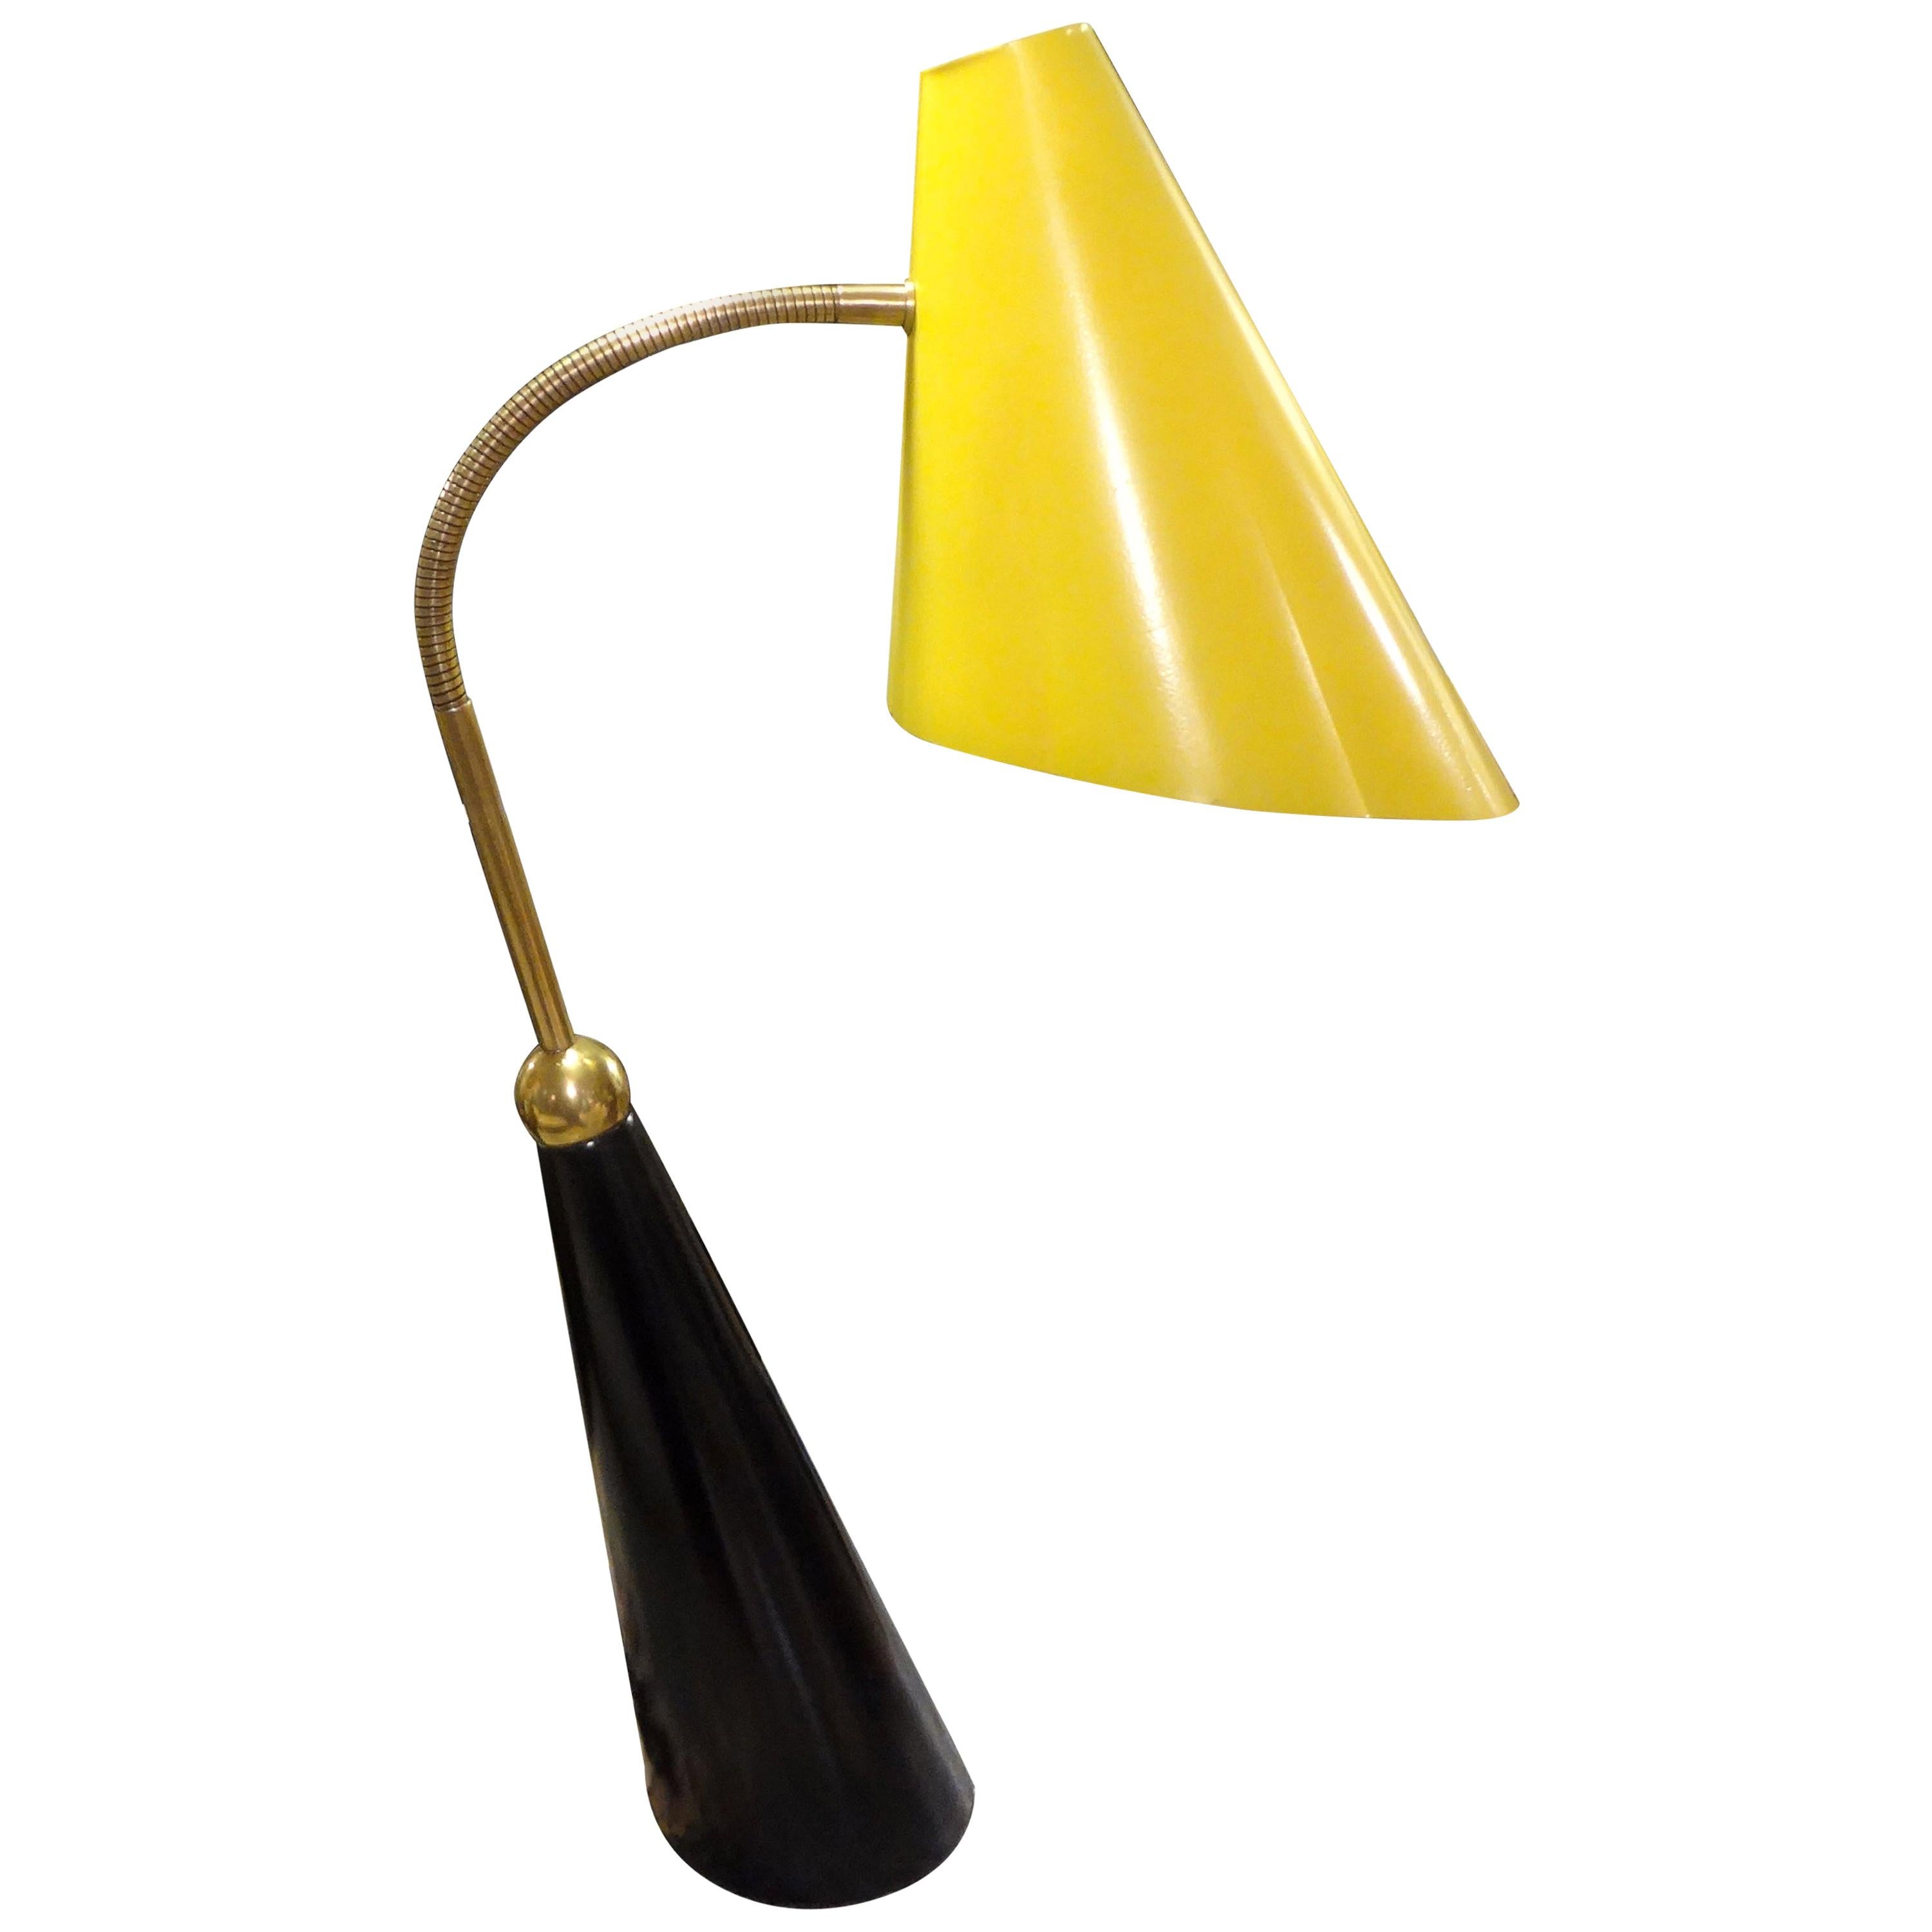 Italian Modern Asymmetrical Lamp Attributed to Gino Sarfatti for Arteluce